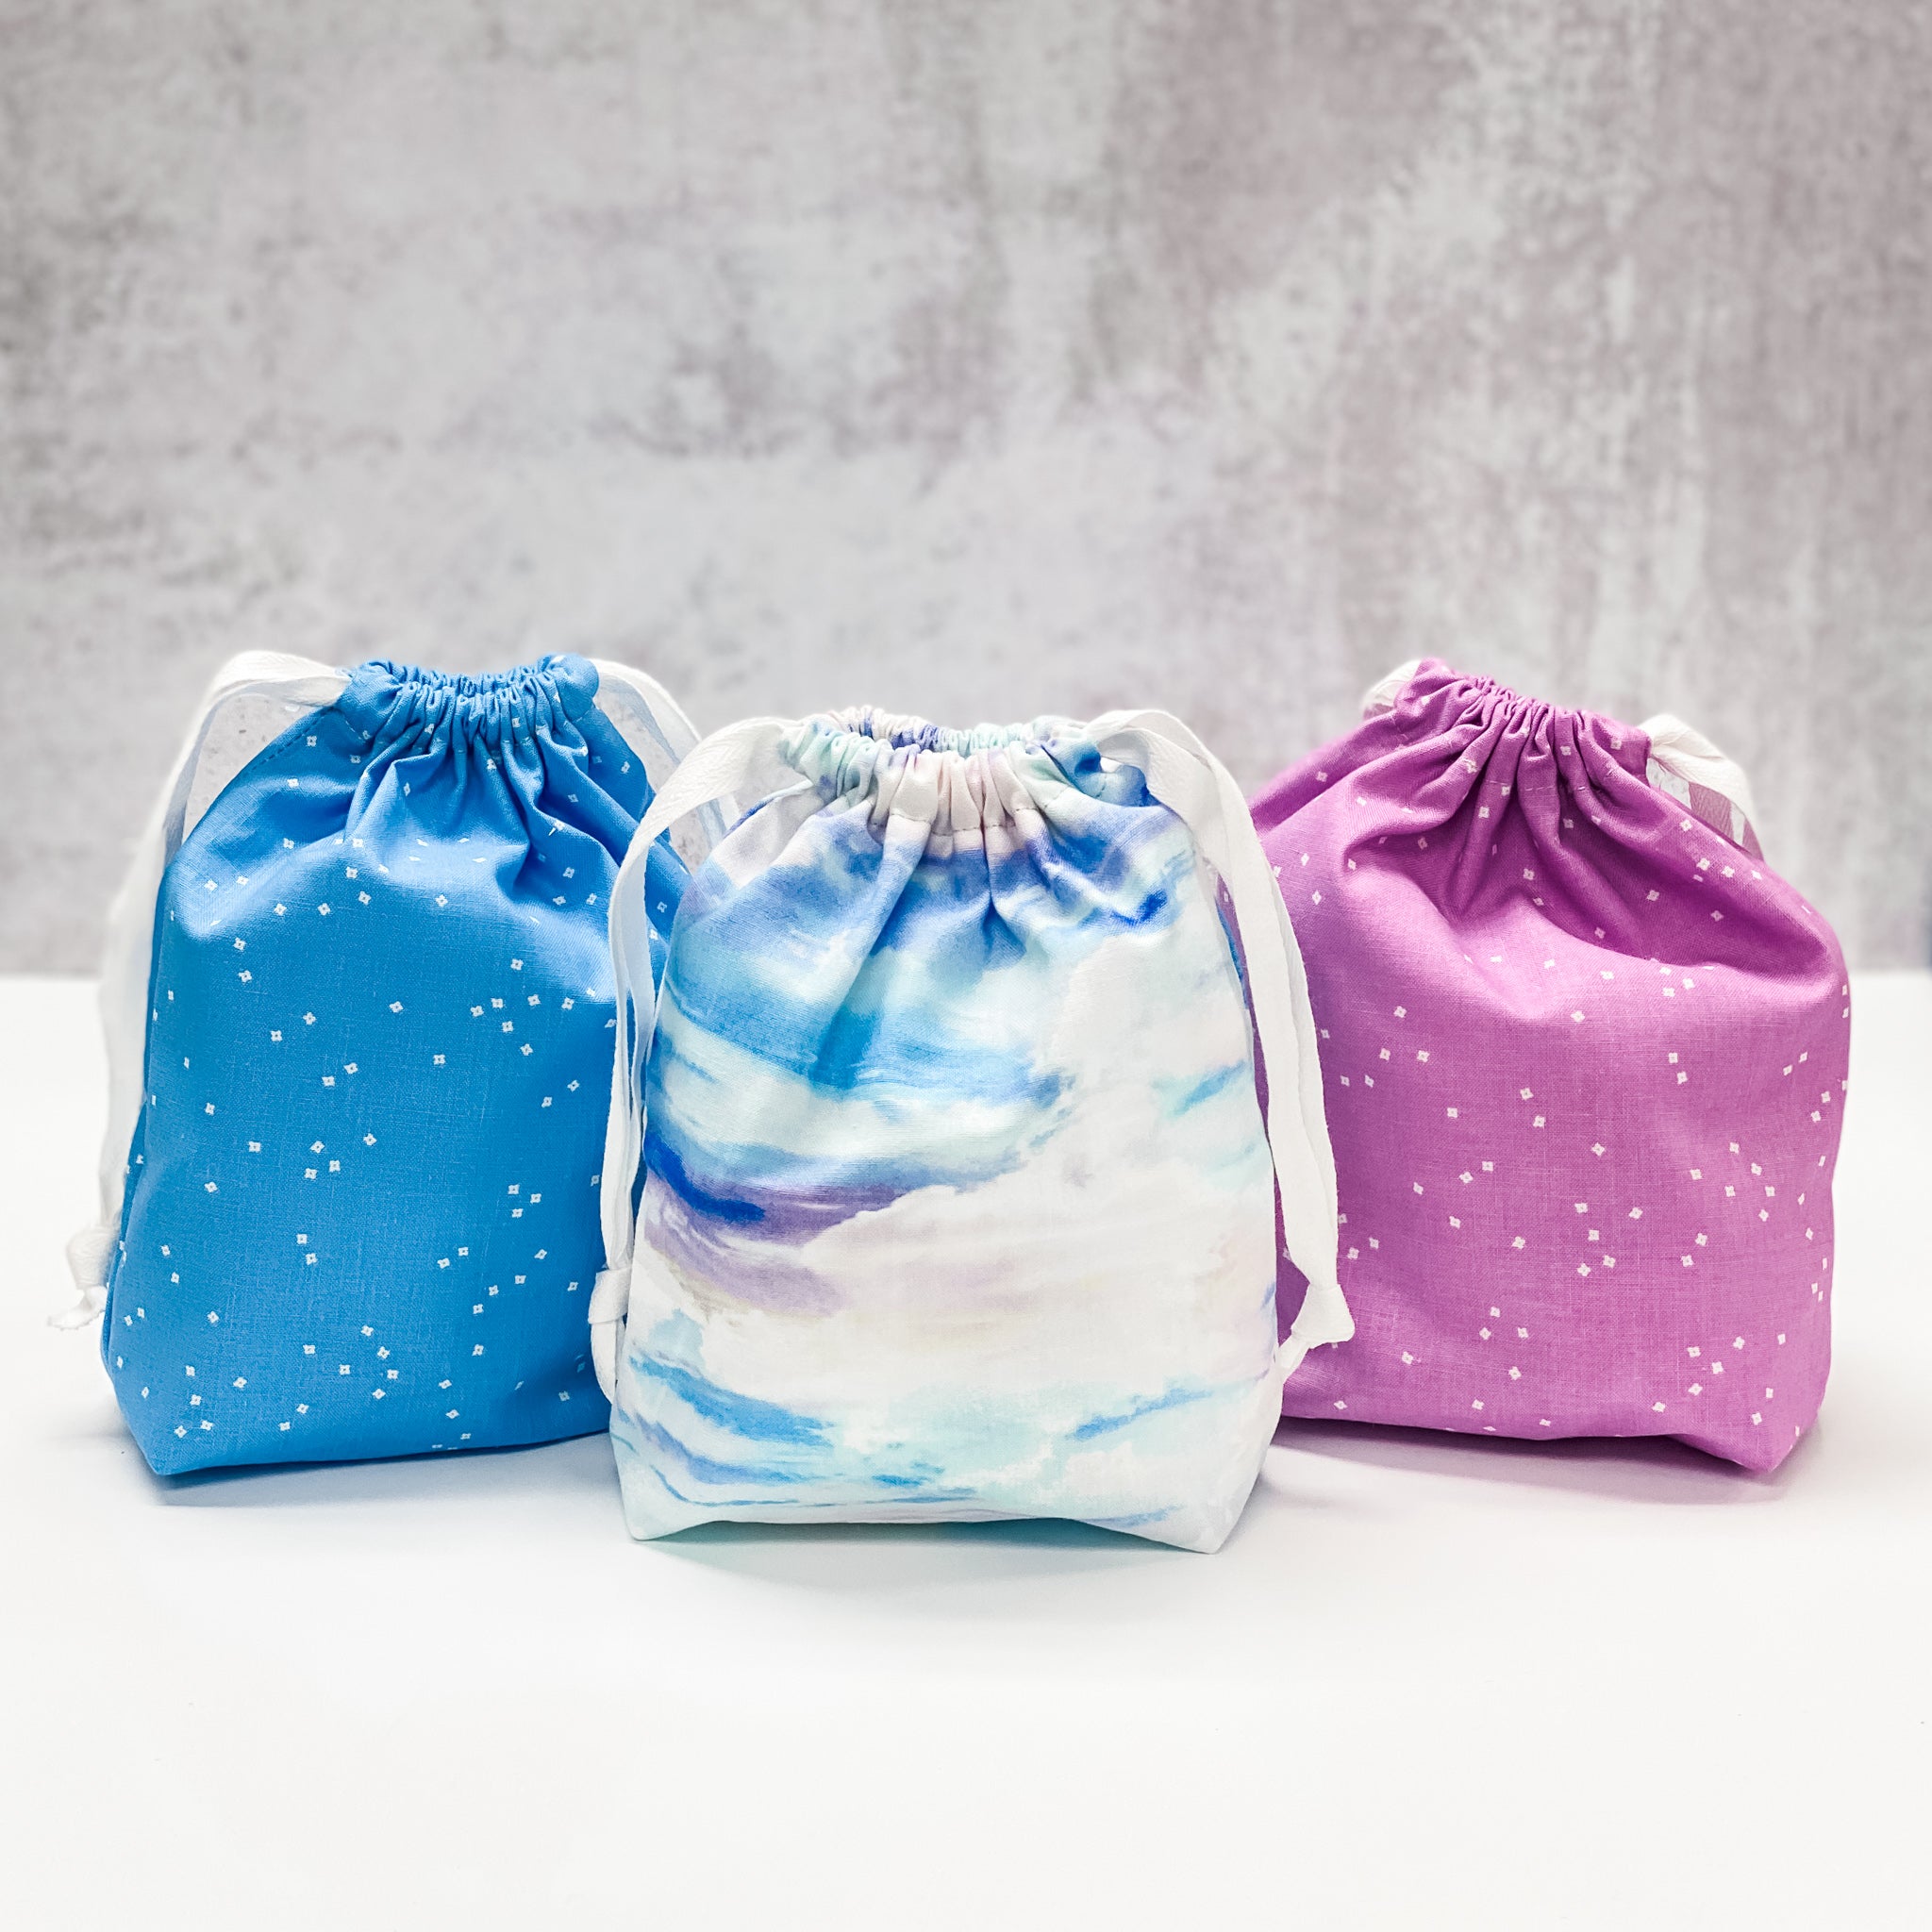 Drawstring Bag Kit - Blue Blossom - Makes 2 Bags